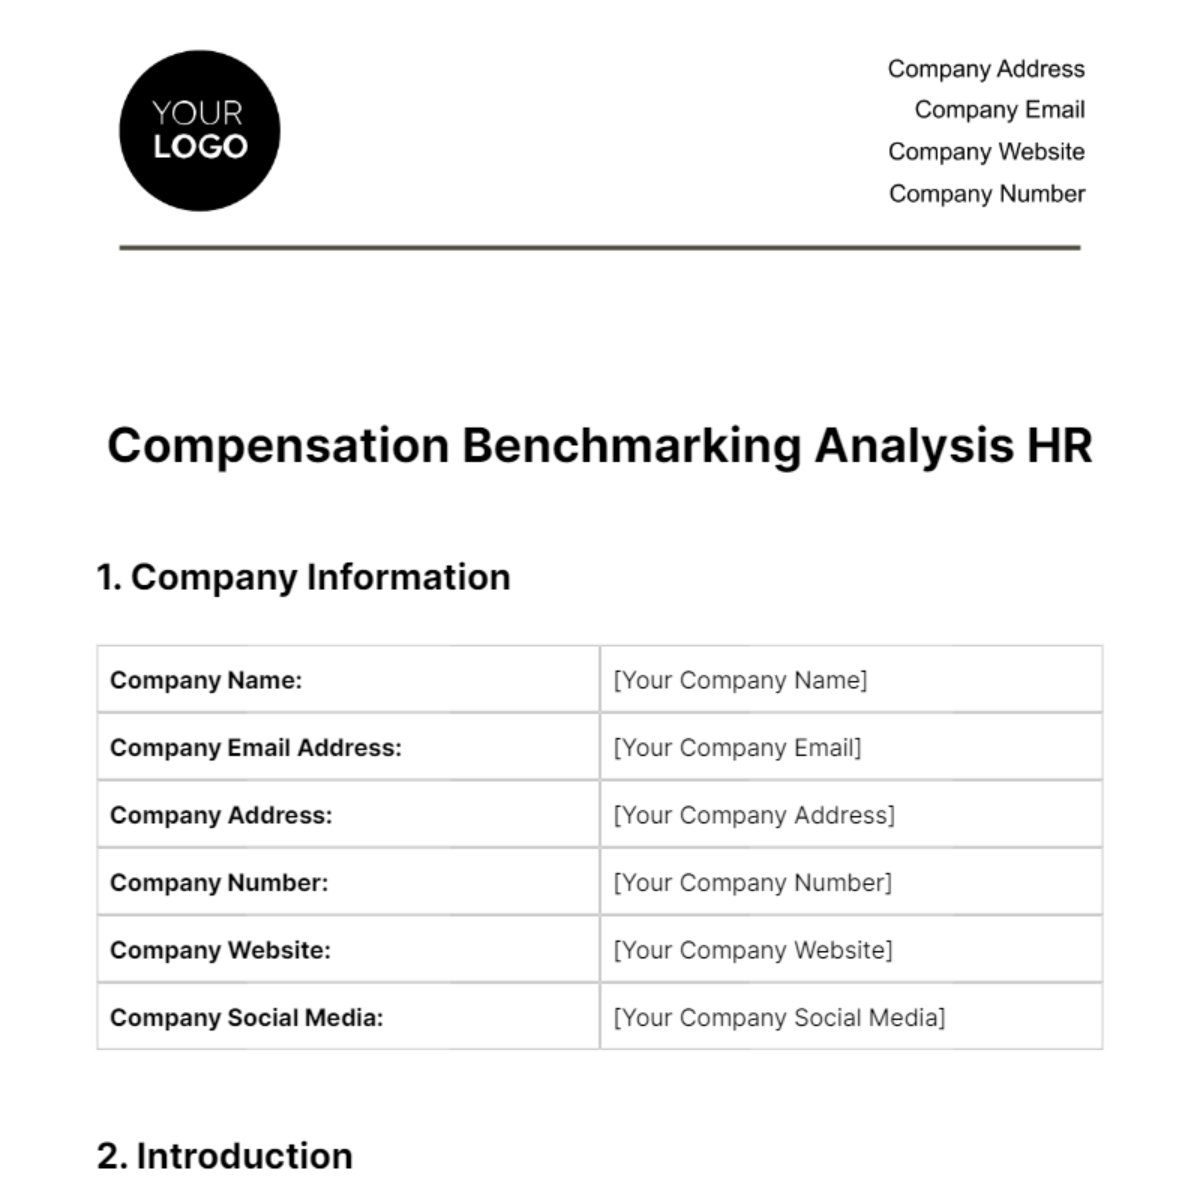 Compensation Benchmarking Analysis HR Template